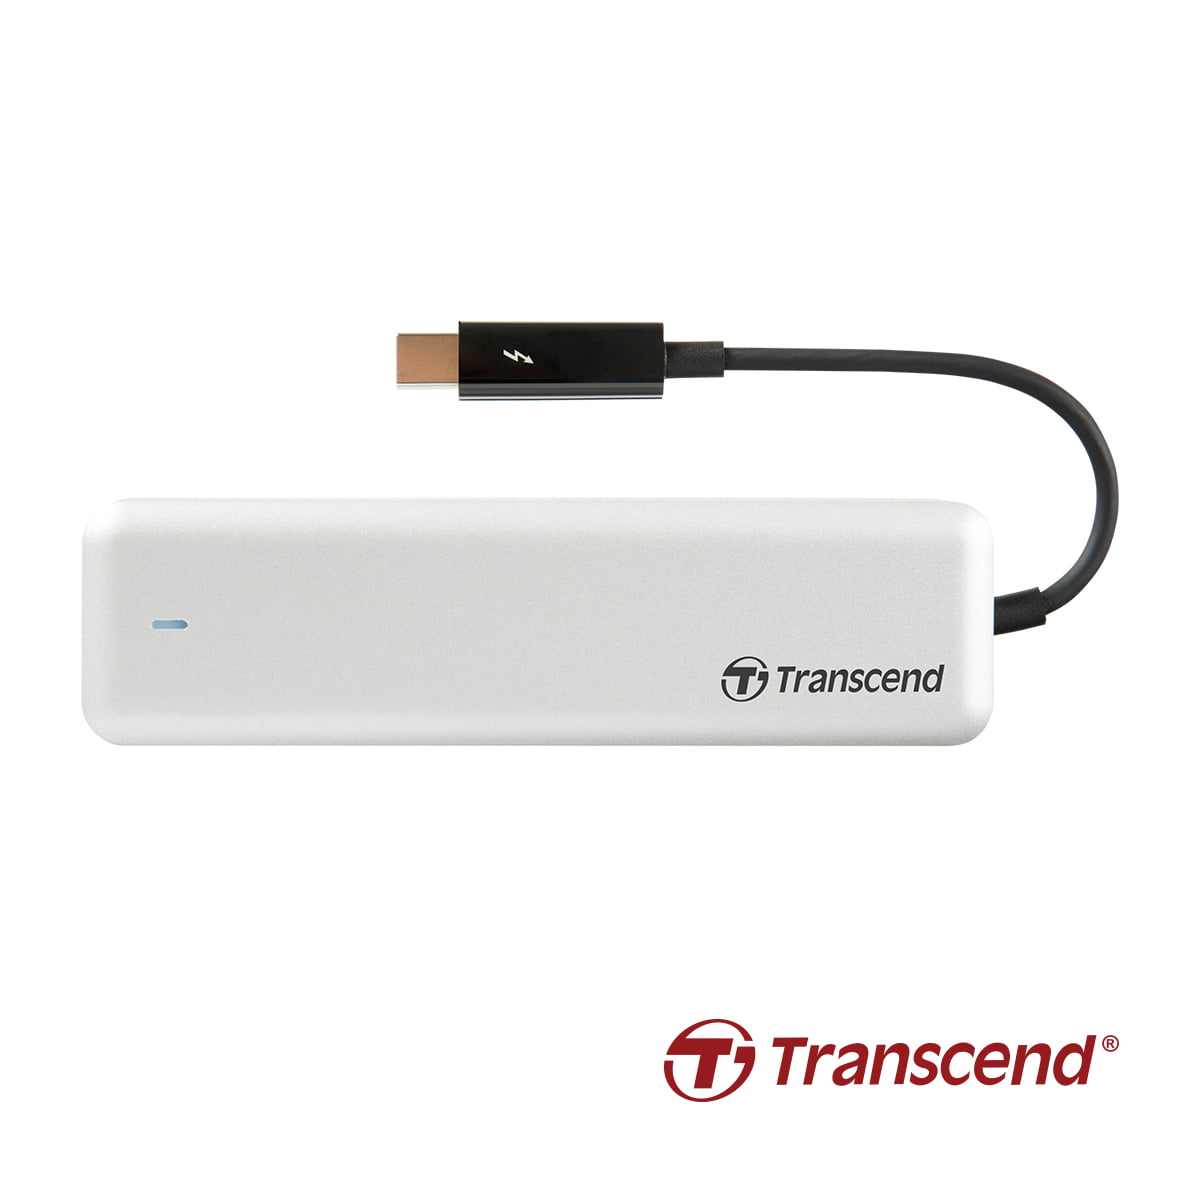 Transcend presenta la nuova JetDrive 825 l’SSD con Thunderbolt PCIe per Mac 1